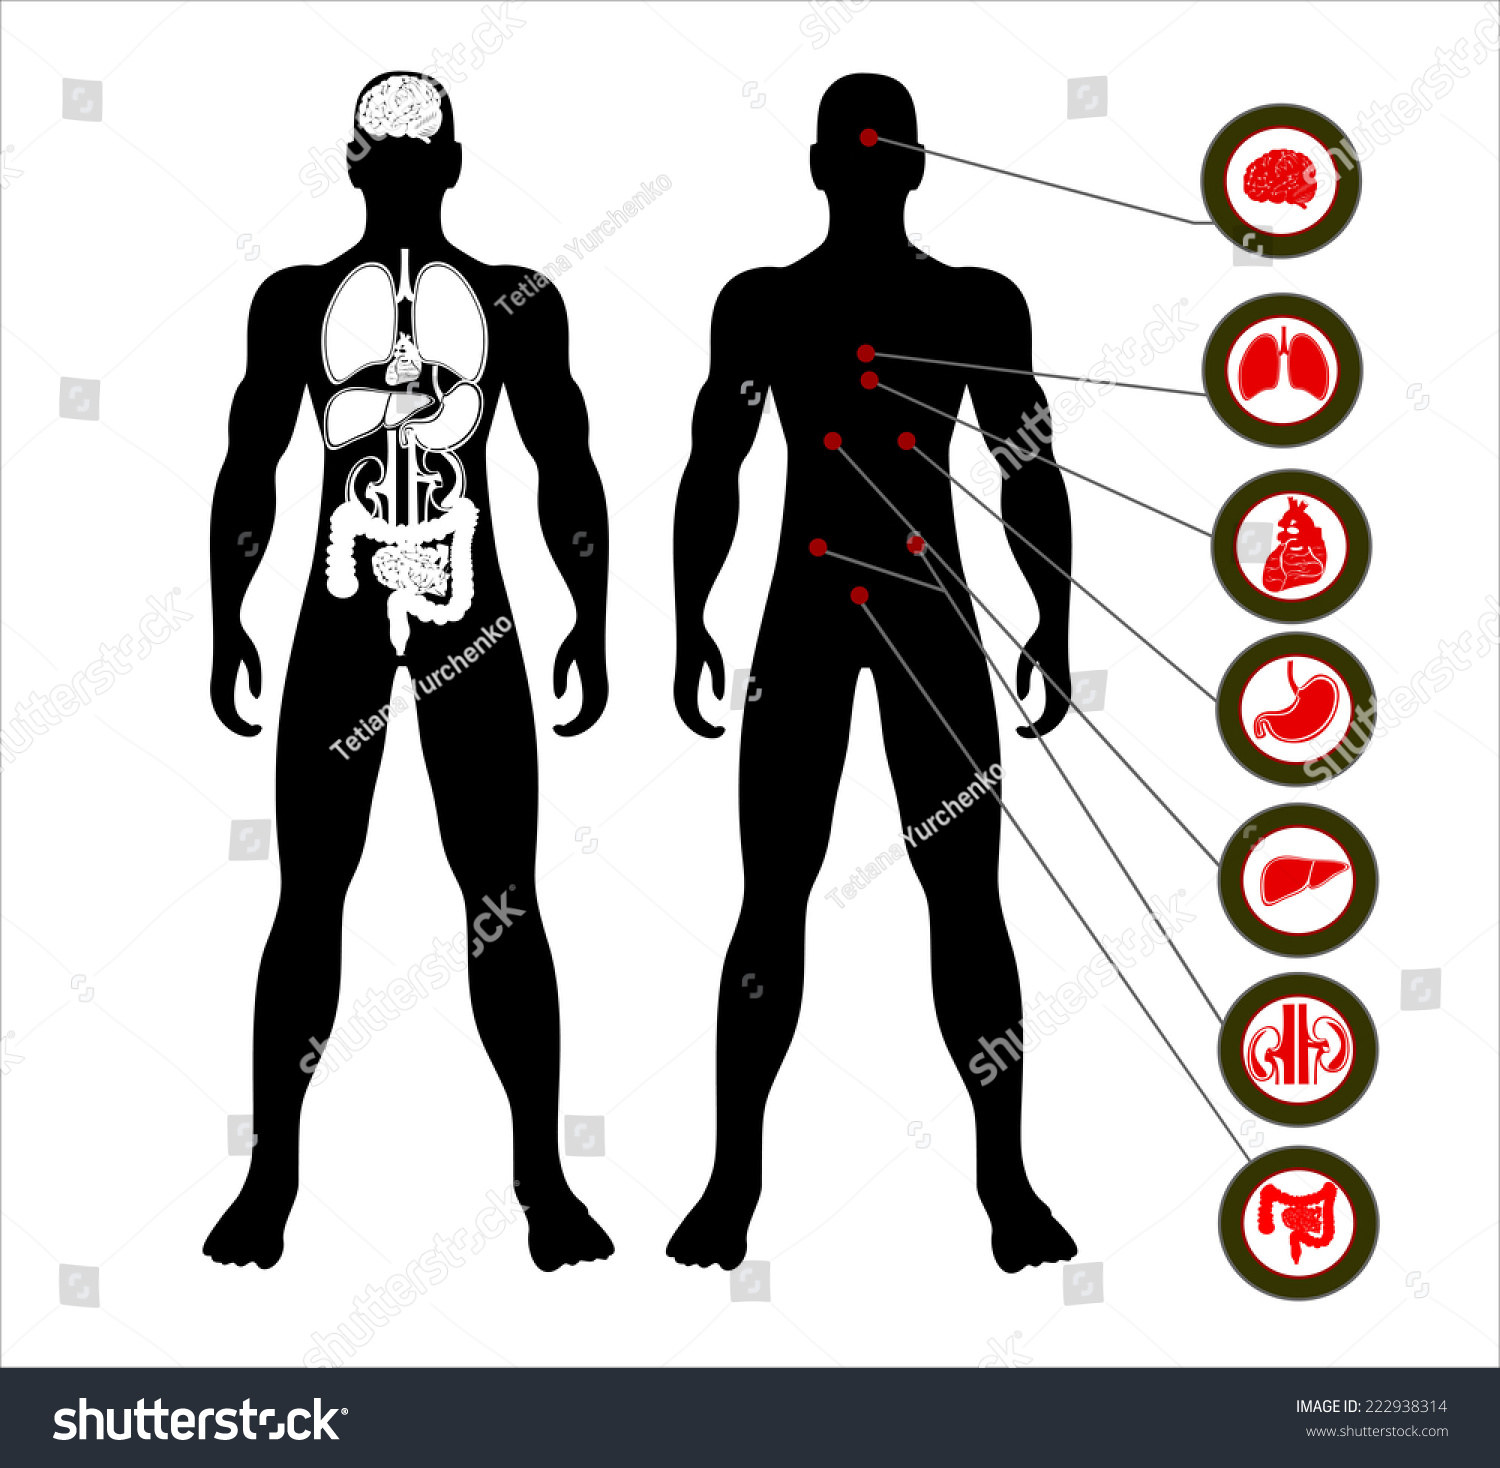 Illustration Of Diagram Of Human Anatomy - 222938314 : Shutterstock